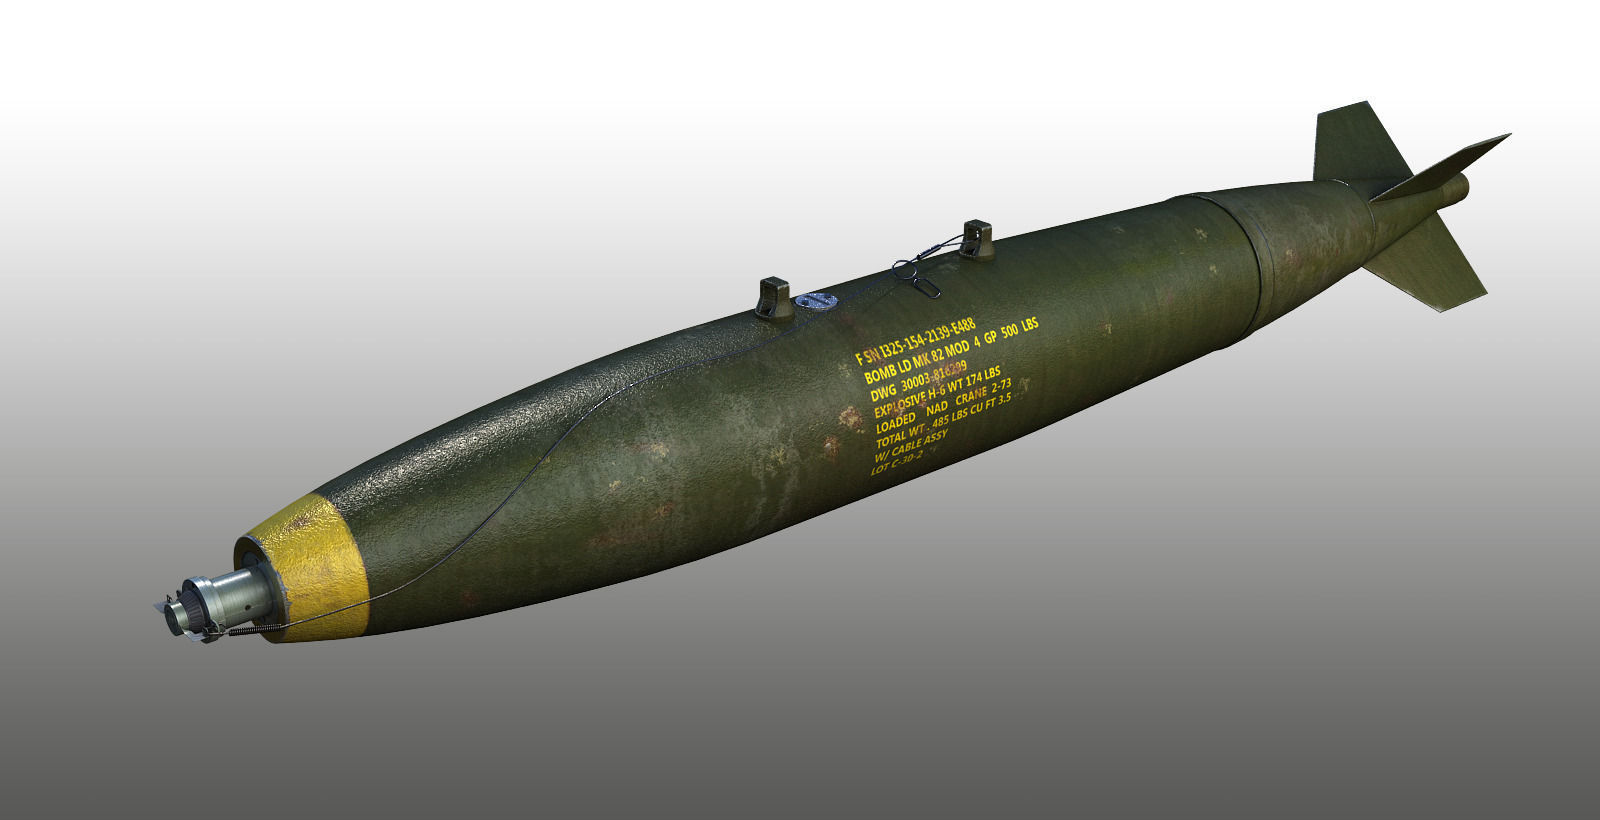 bomb-mk-82-3d-model-max-obj-3ds-fbx.jpg